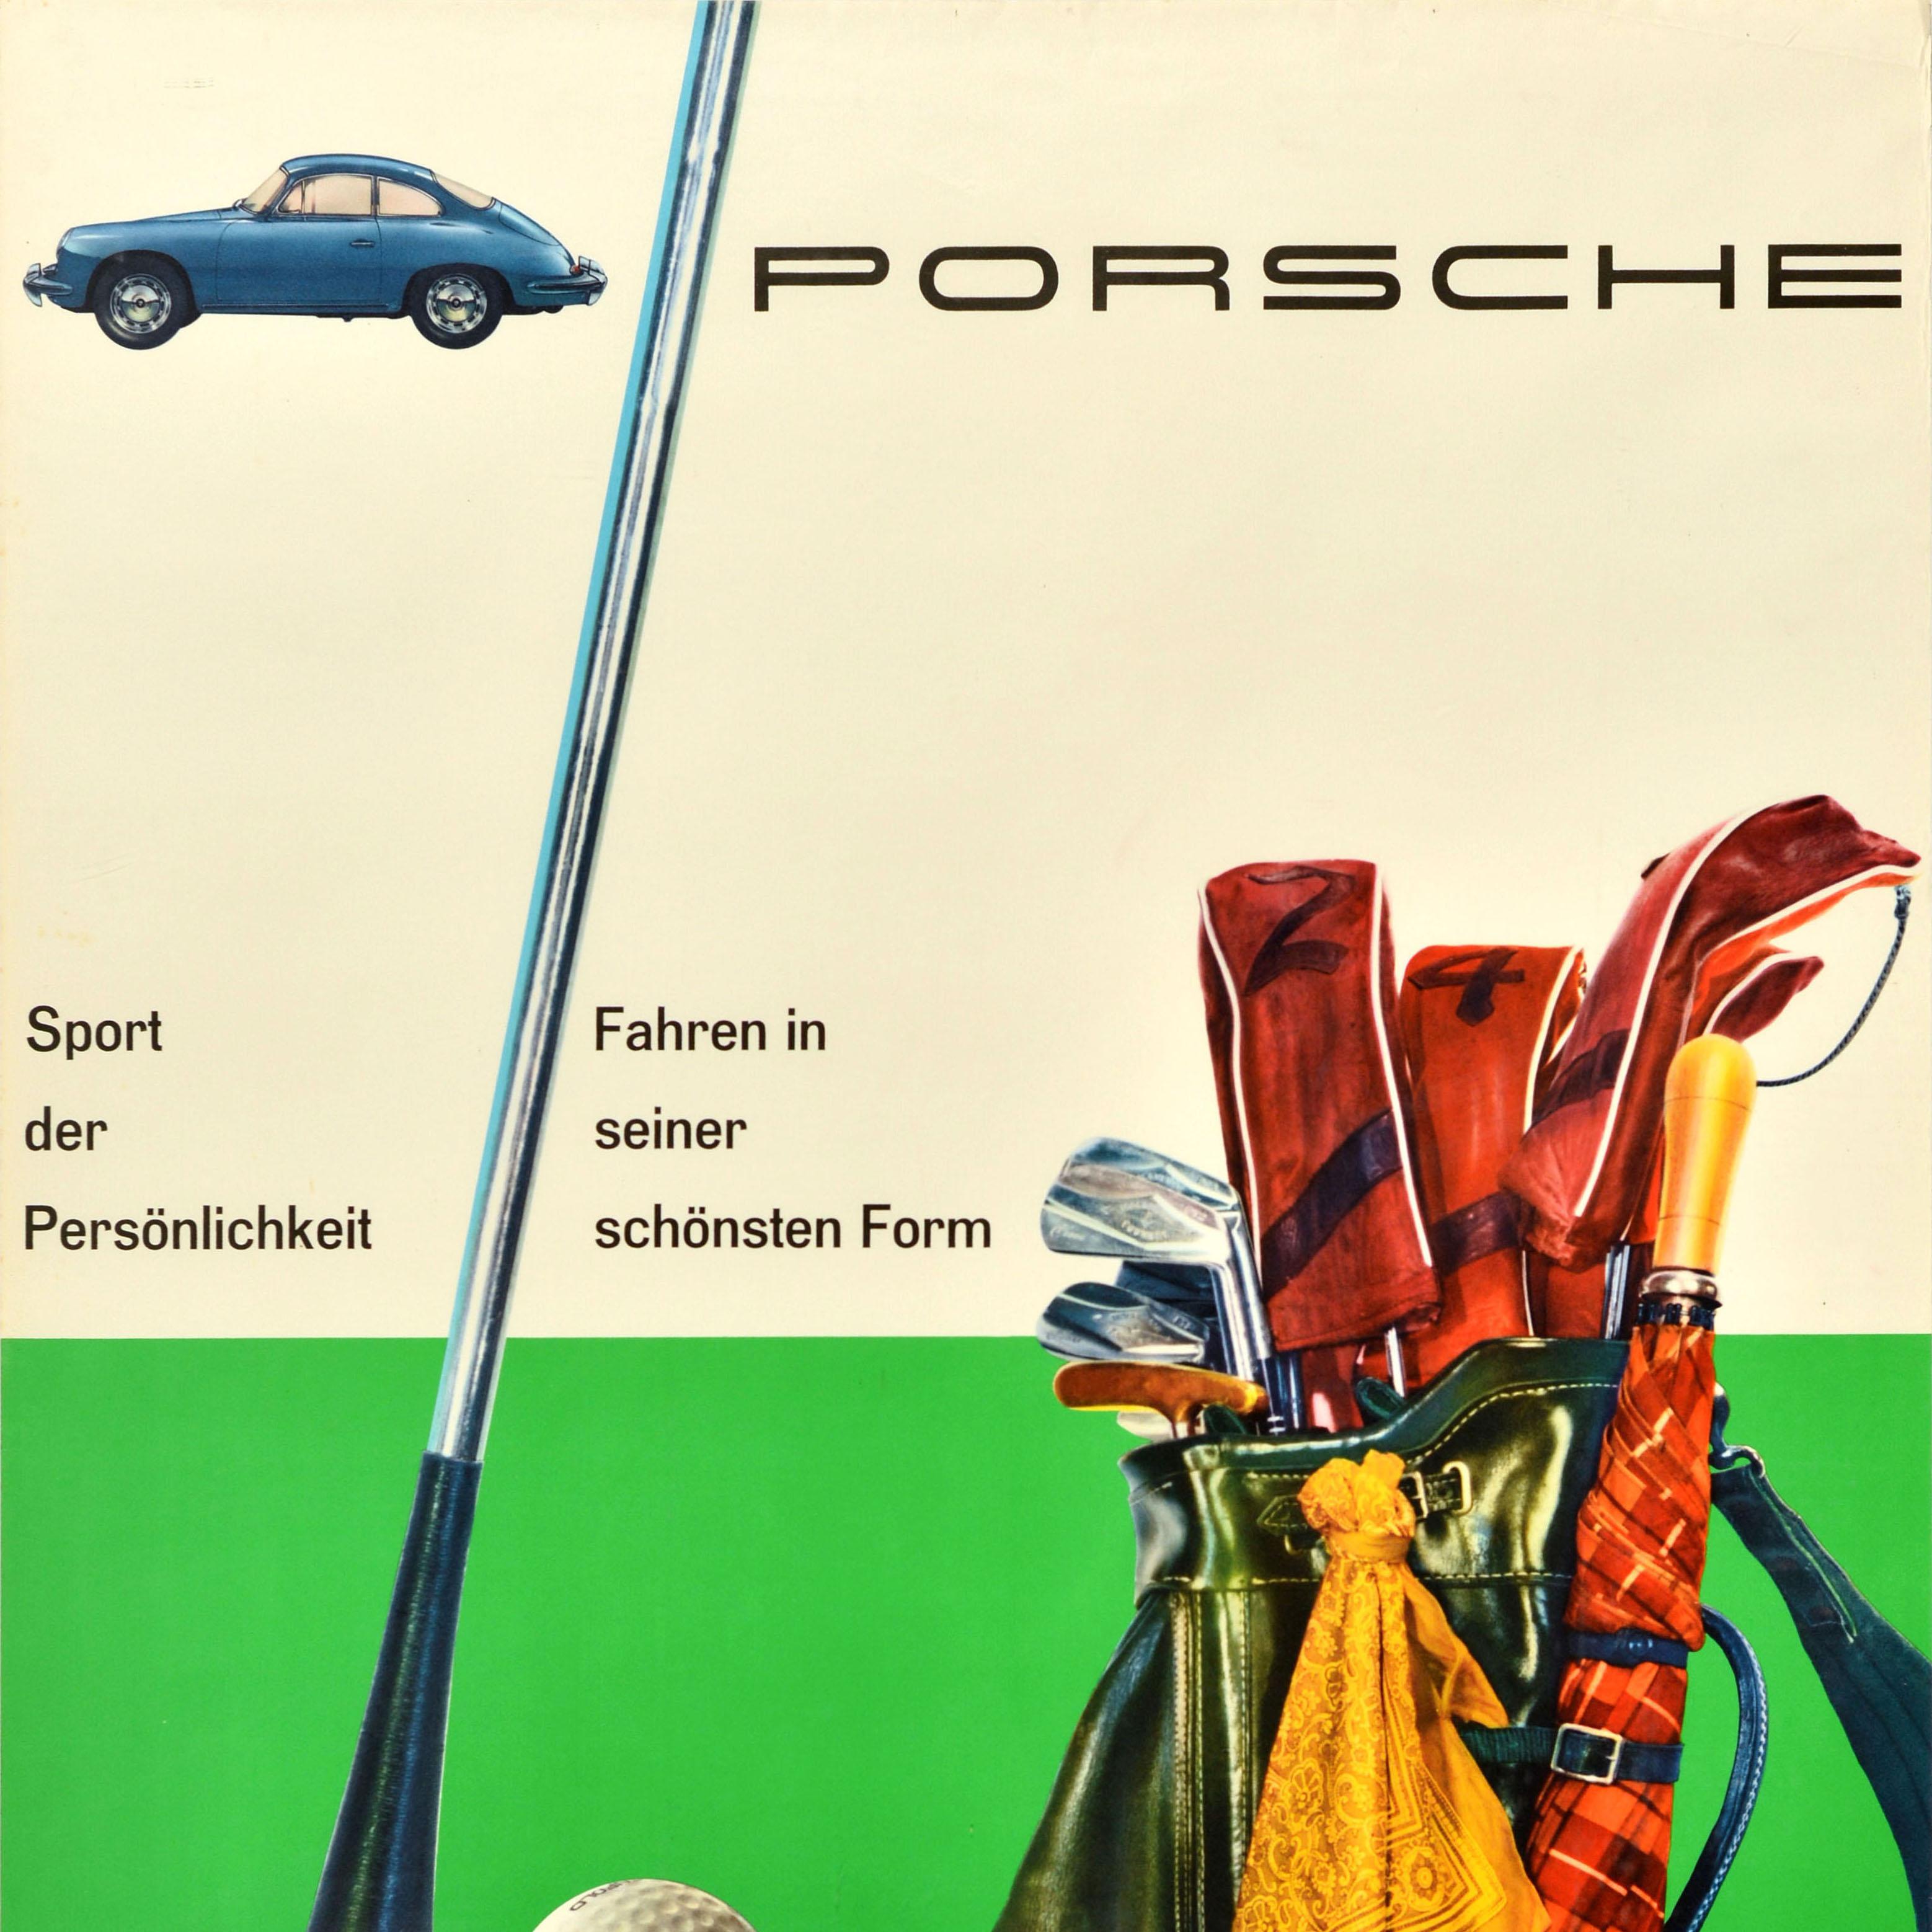 Original Vintage Car Advertising Poster Porsche Golf Sport Of Personality Lohrer - Print by Hanns Lohrer